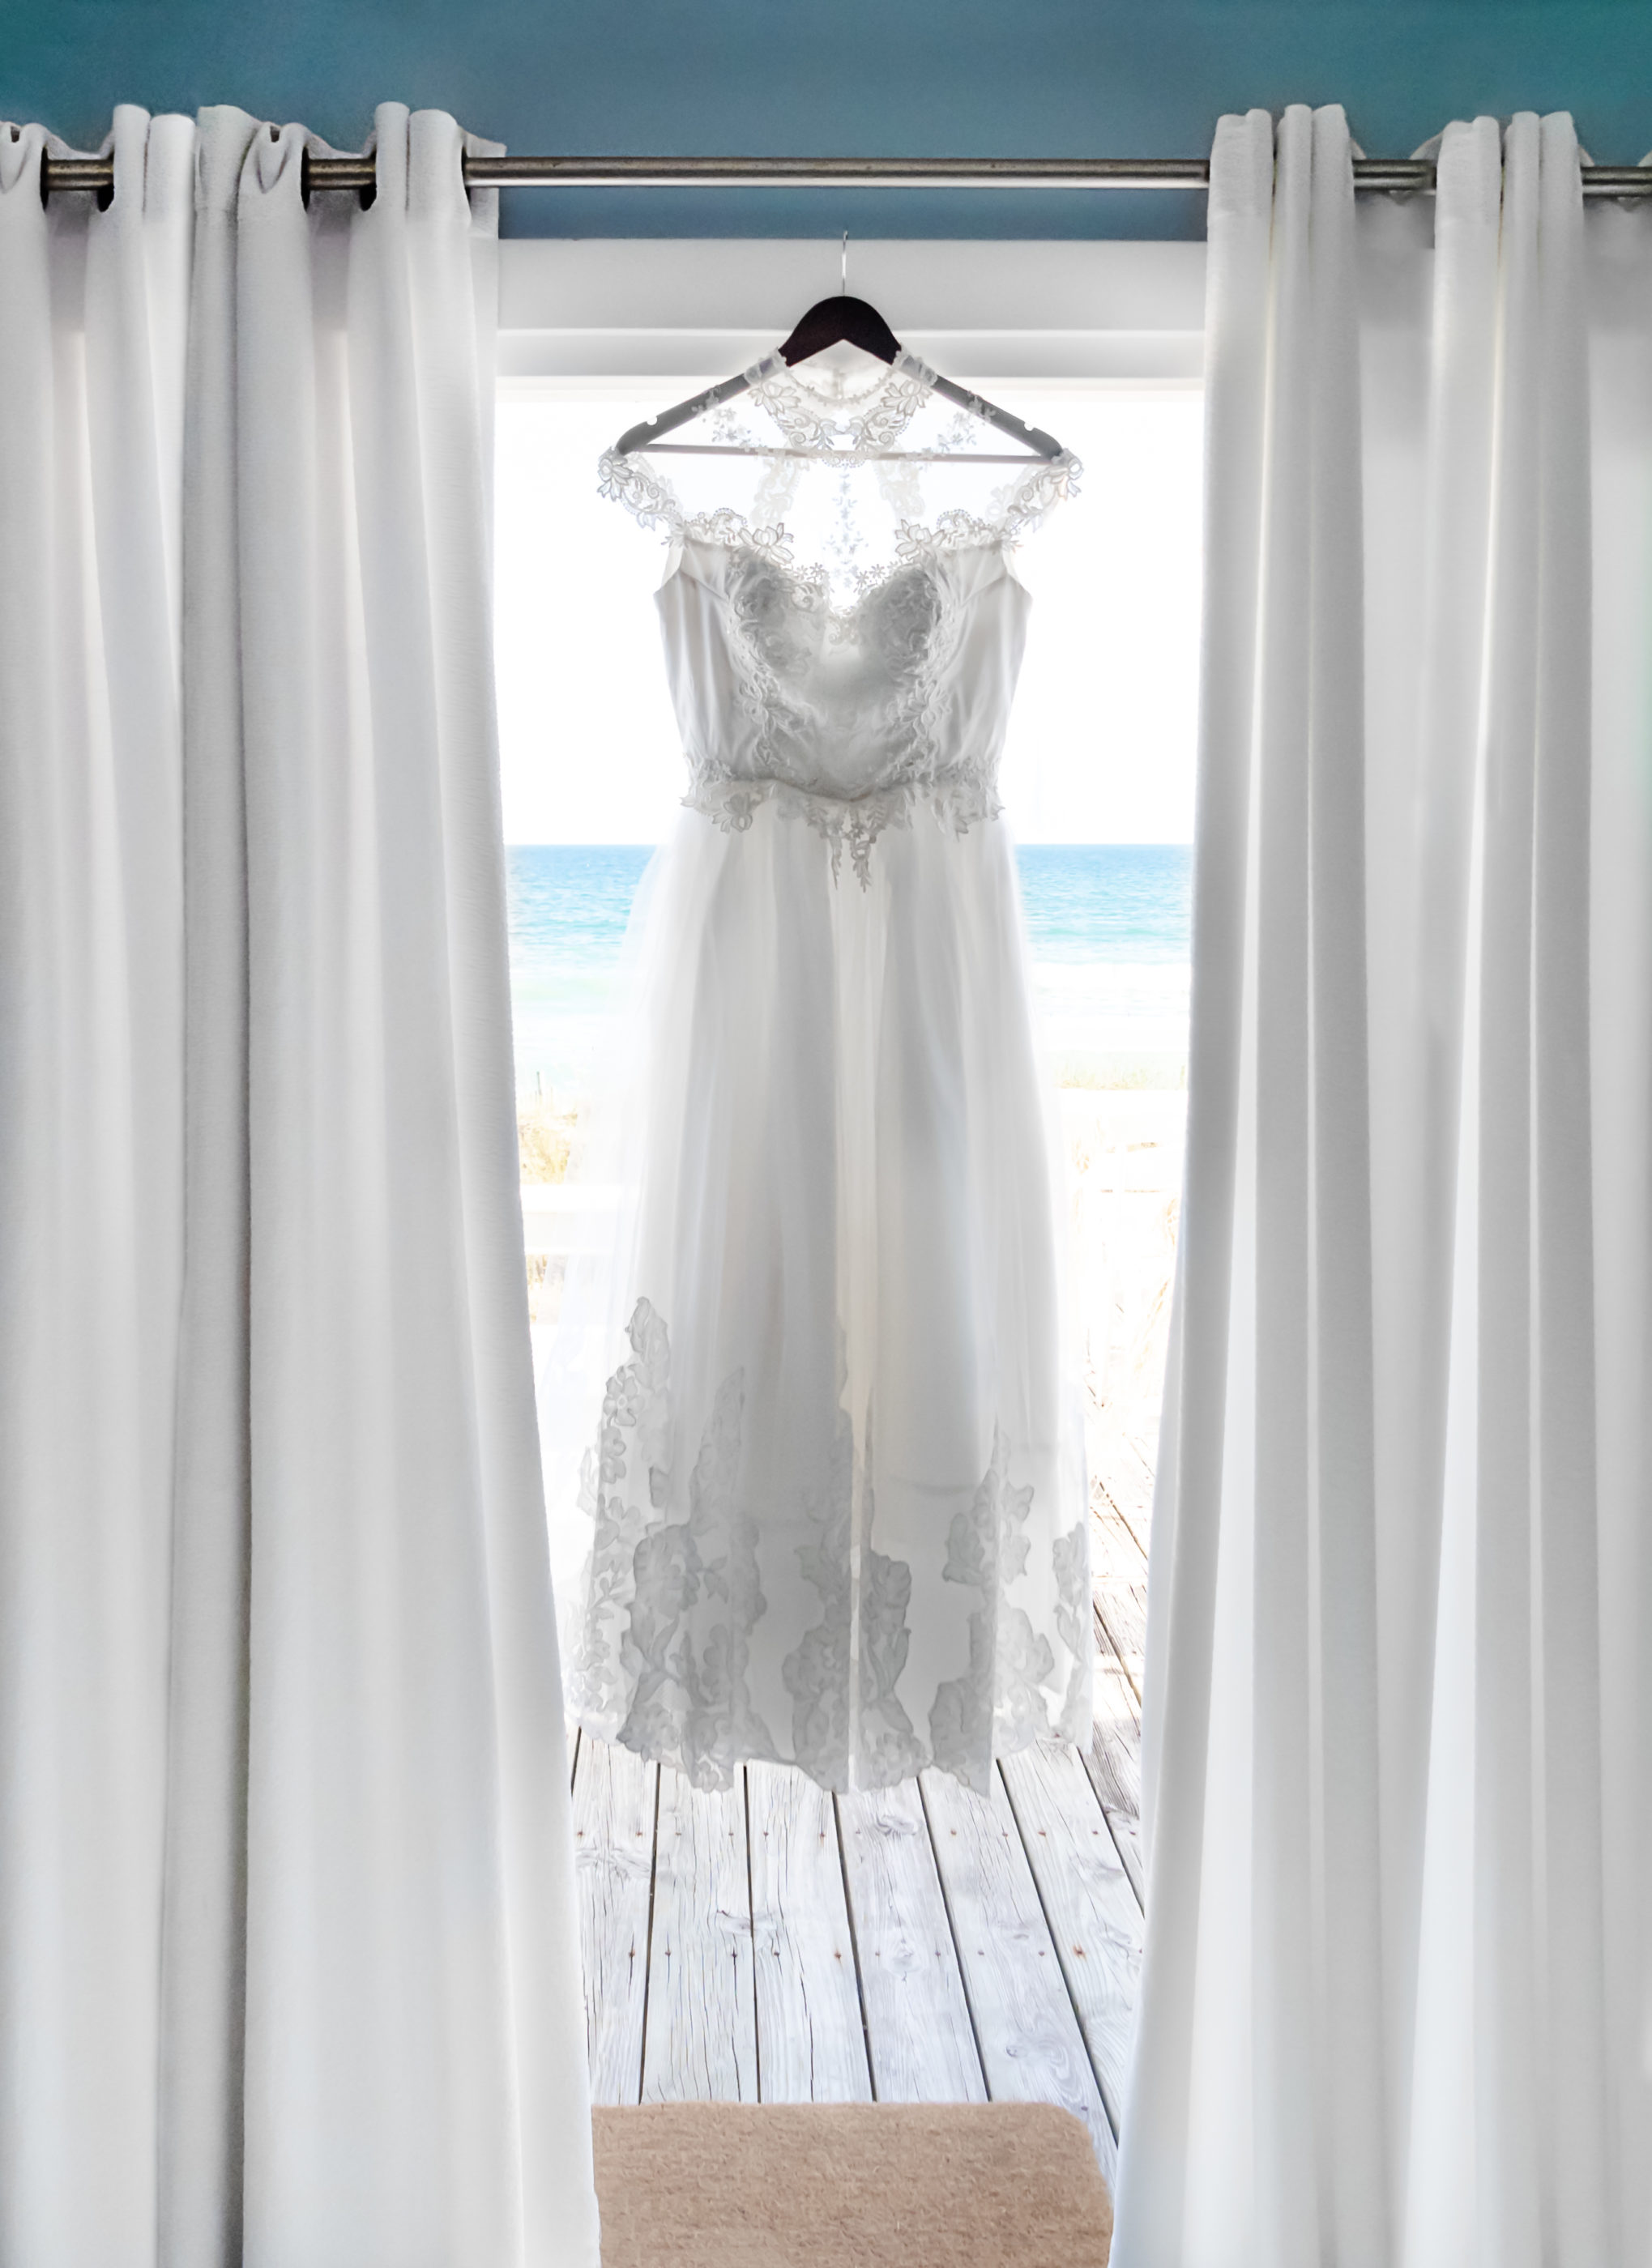 white wedding dress hanging in doorway with ocean behind